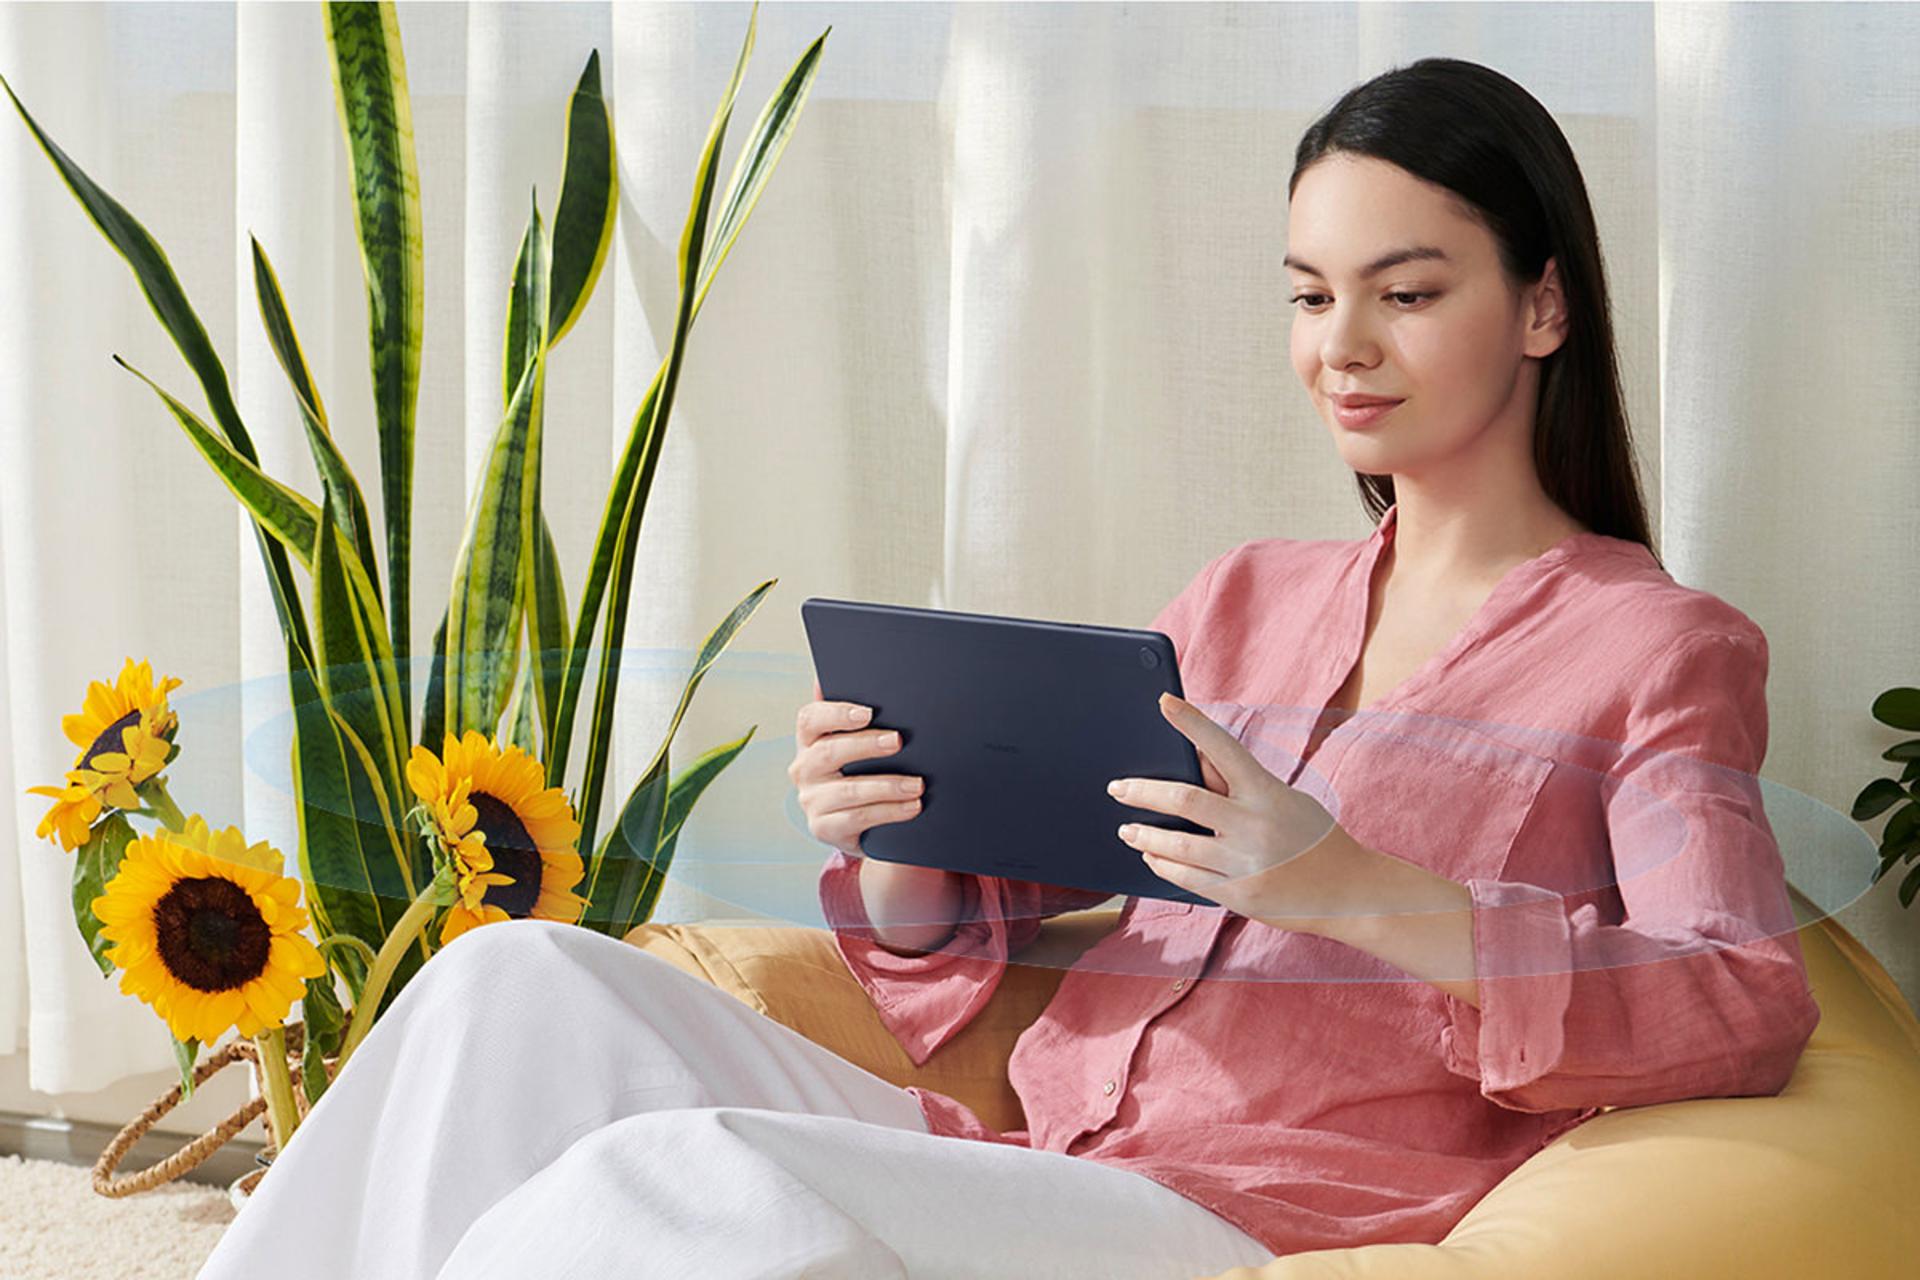 مرجع متخصصين ايران تبلت اينجوي تبلت 2 هواوي در دست متخصص / Huawei Enjoy Tablet 2